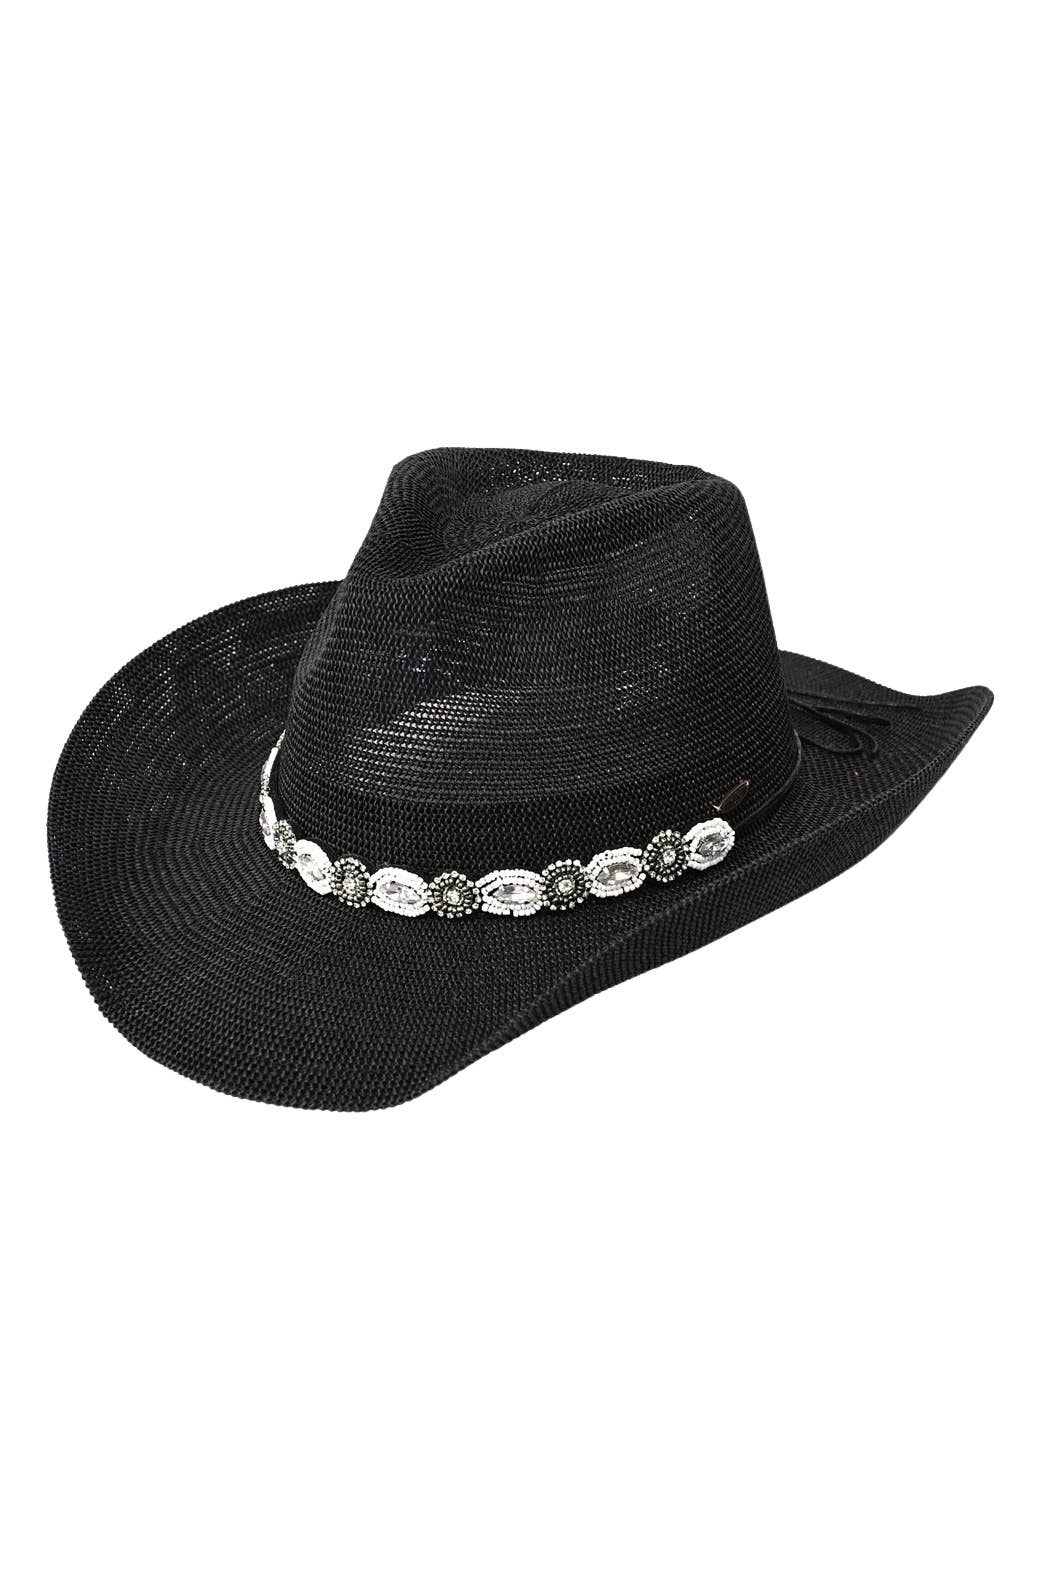 Embellish Your Life - Jeweled Cowboy Straw Hat